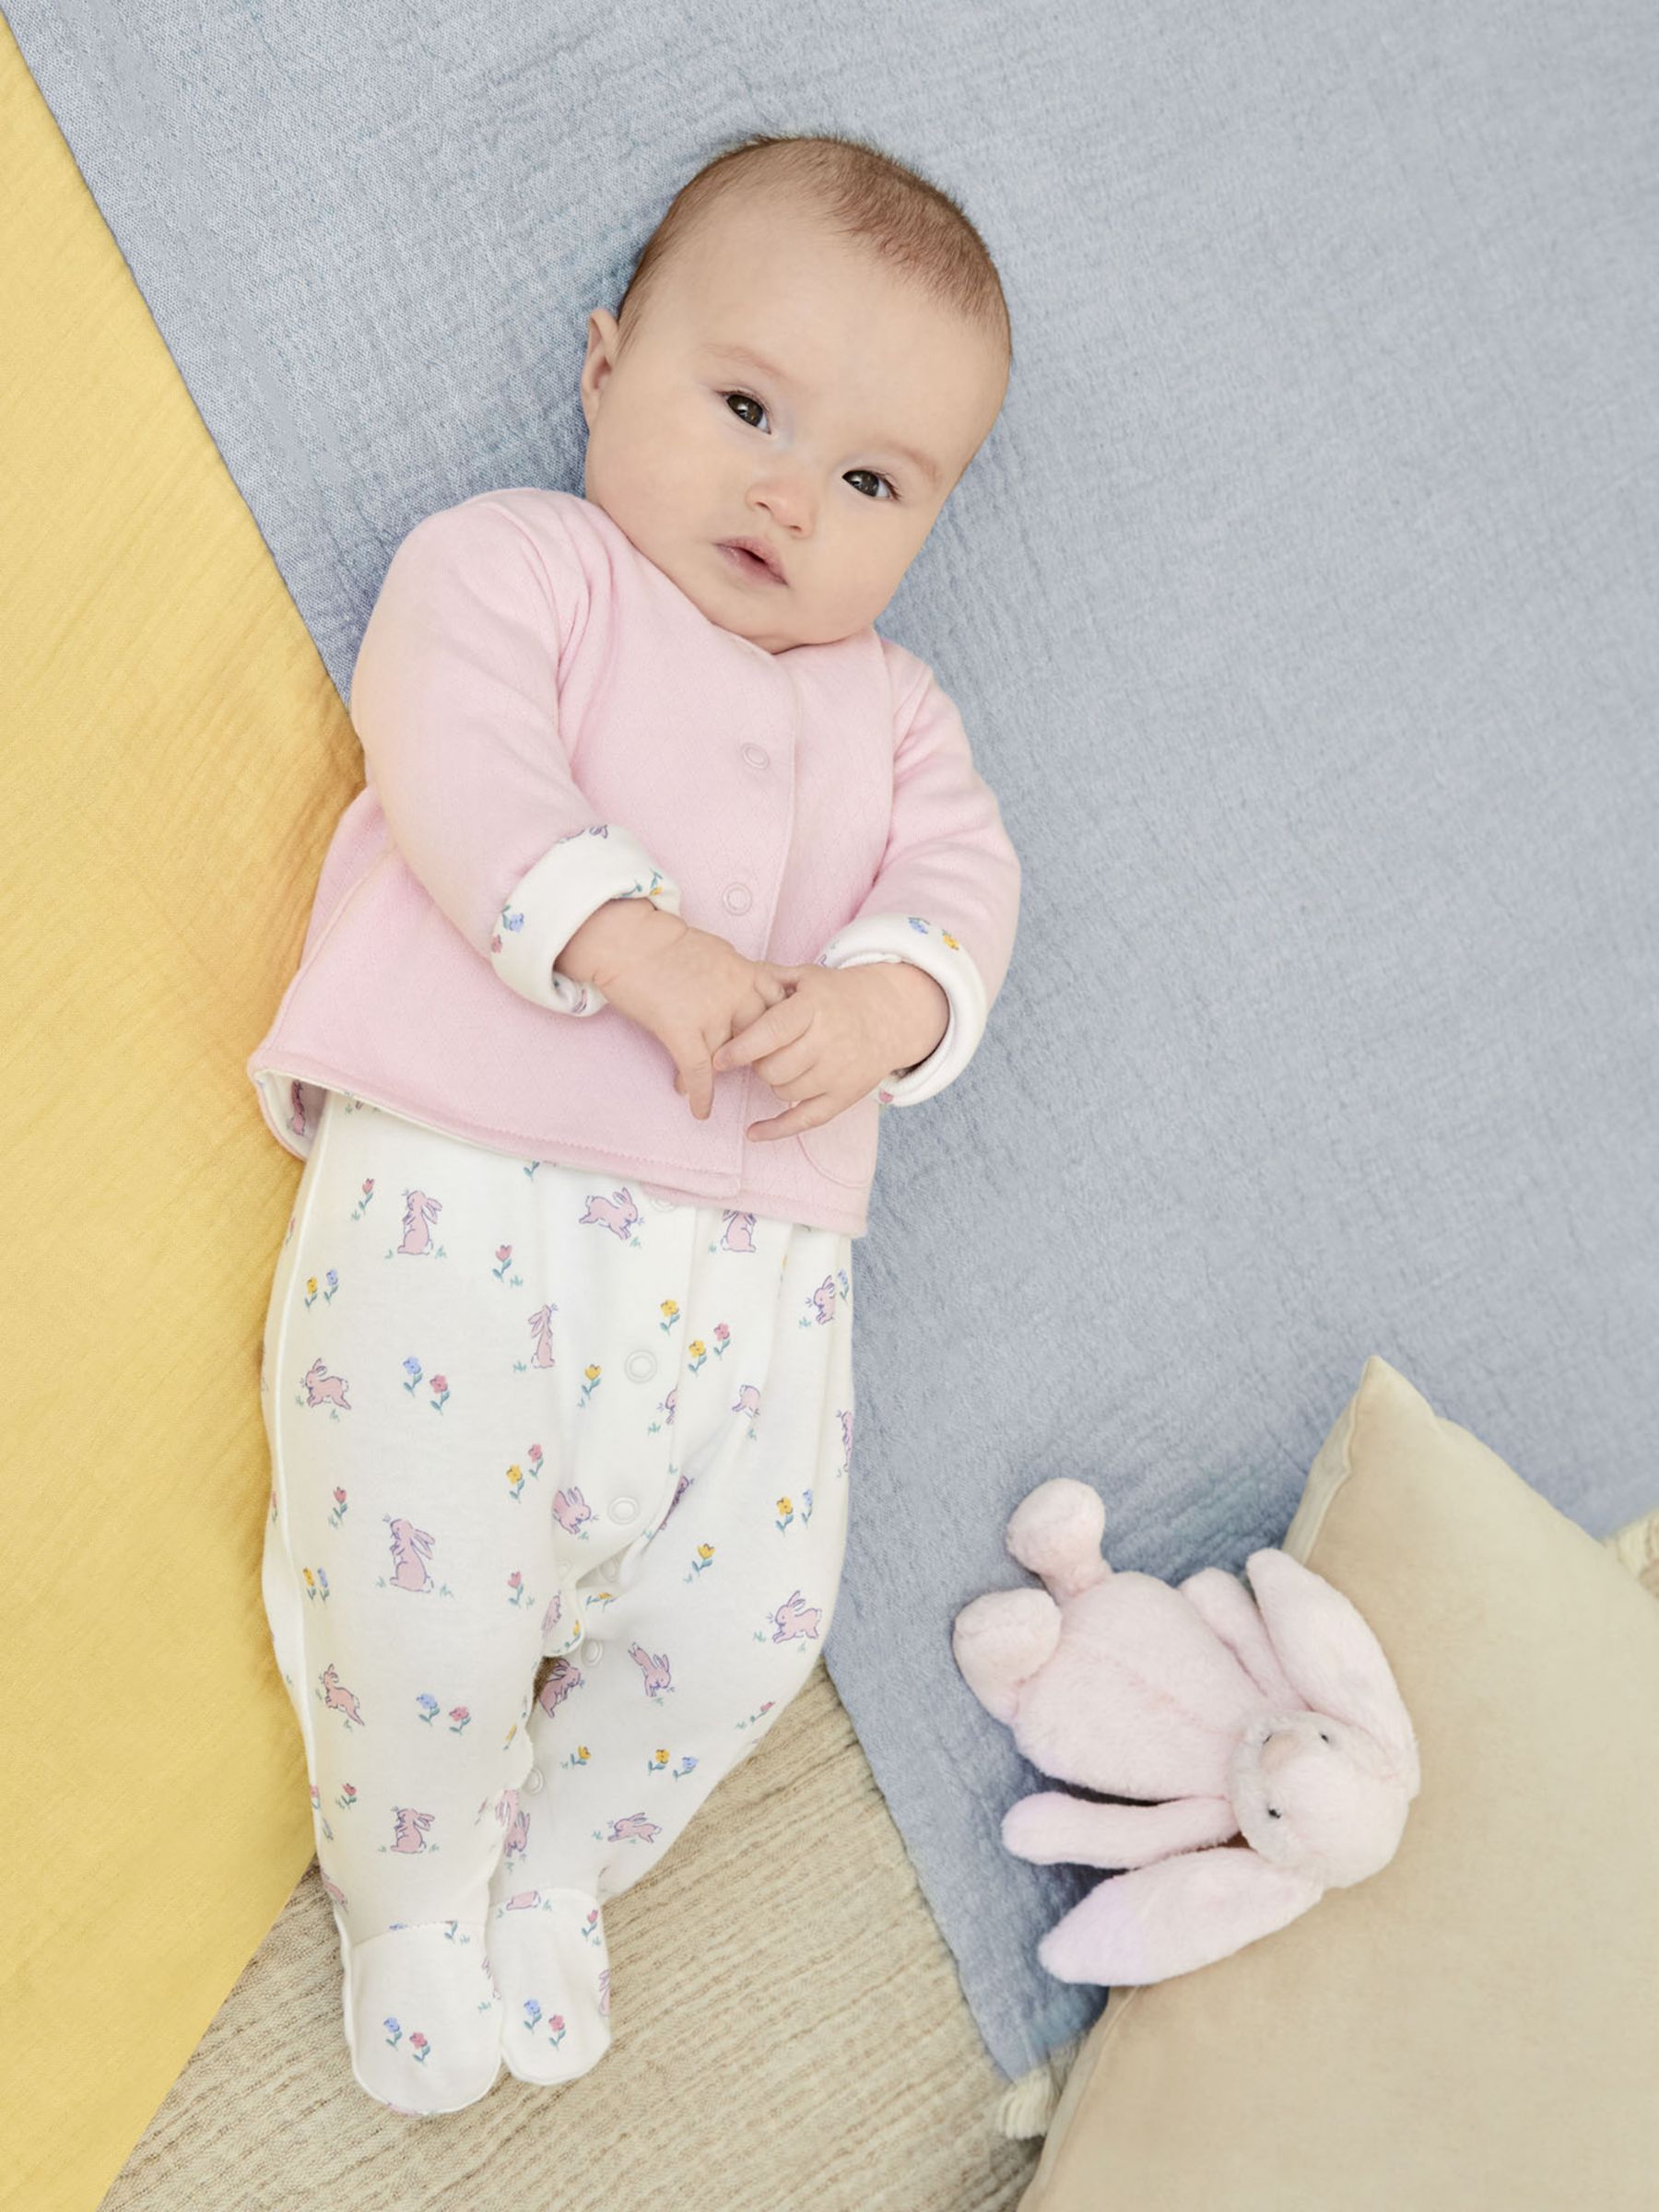 JoJo Maman Bébé 2-Piece Bunny Sleepsuit & Jacket Set, Pink/White, 3-6 months